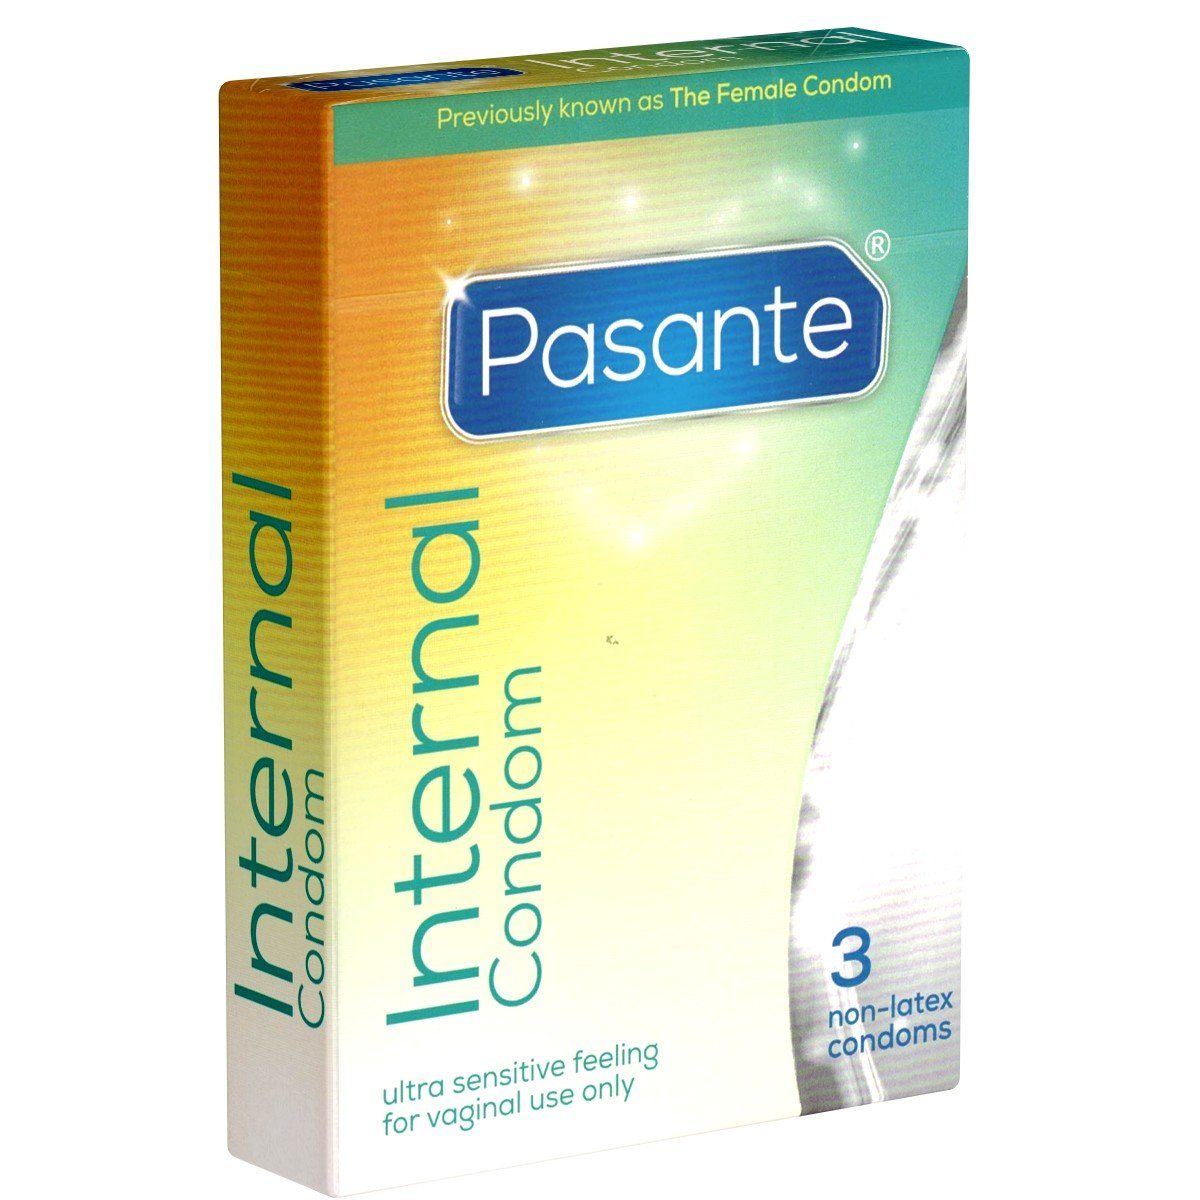 Pasante Kondome «Internal Condom» (Femidom) Packung mit, 3 St., Frauenkondome, aktive Verhütung für Frauen, latexfreie Frauenkondome für hormonfreie Verhütung